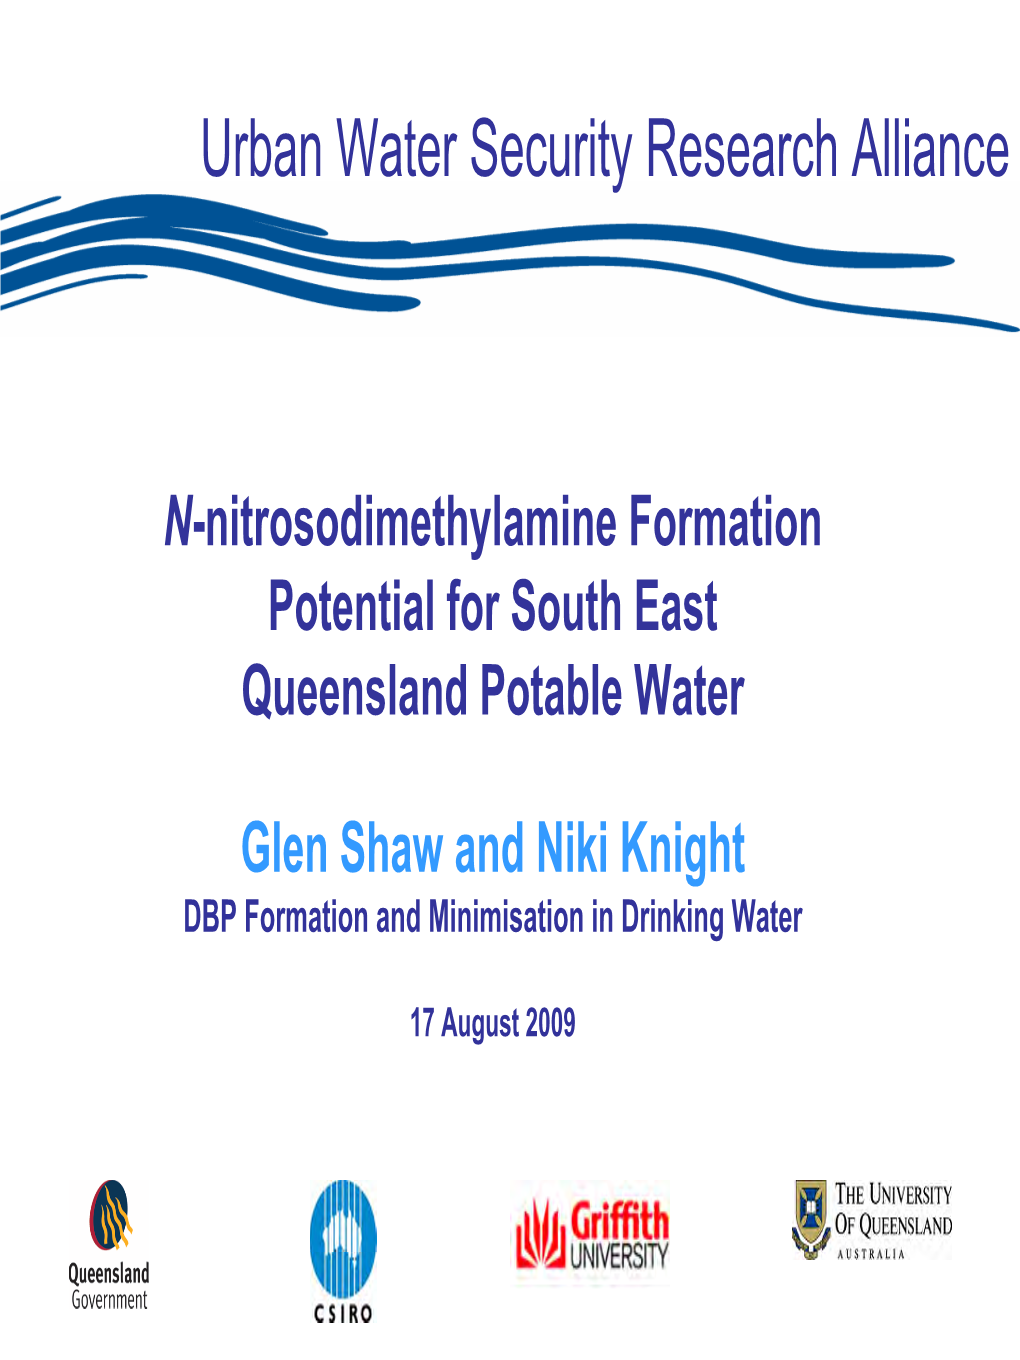 N-Nitrosodimethylamine Formation Potential for South East Queensland Potable Water